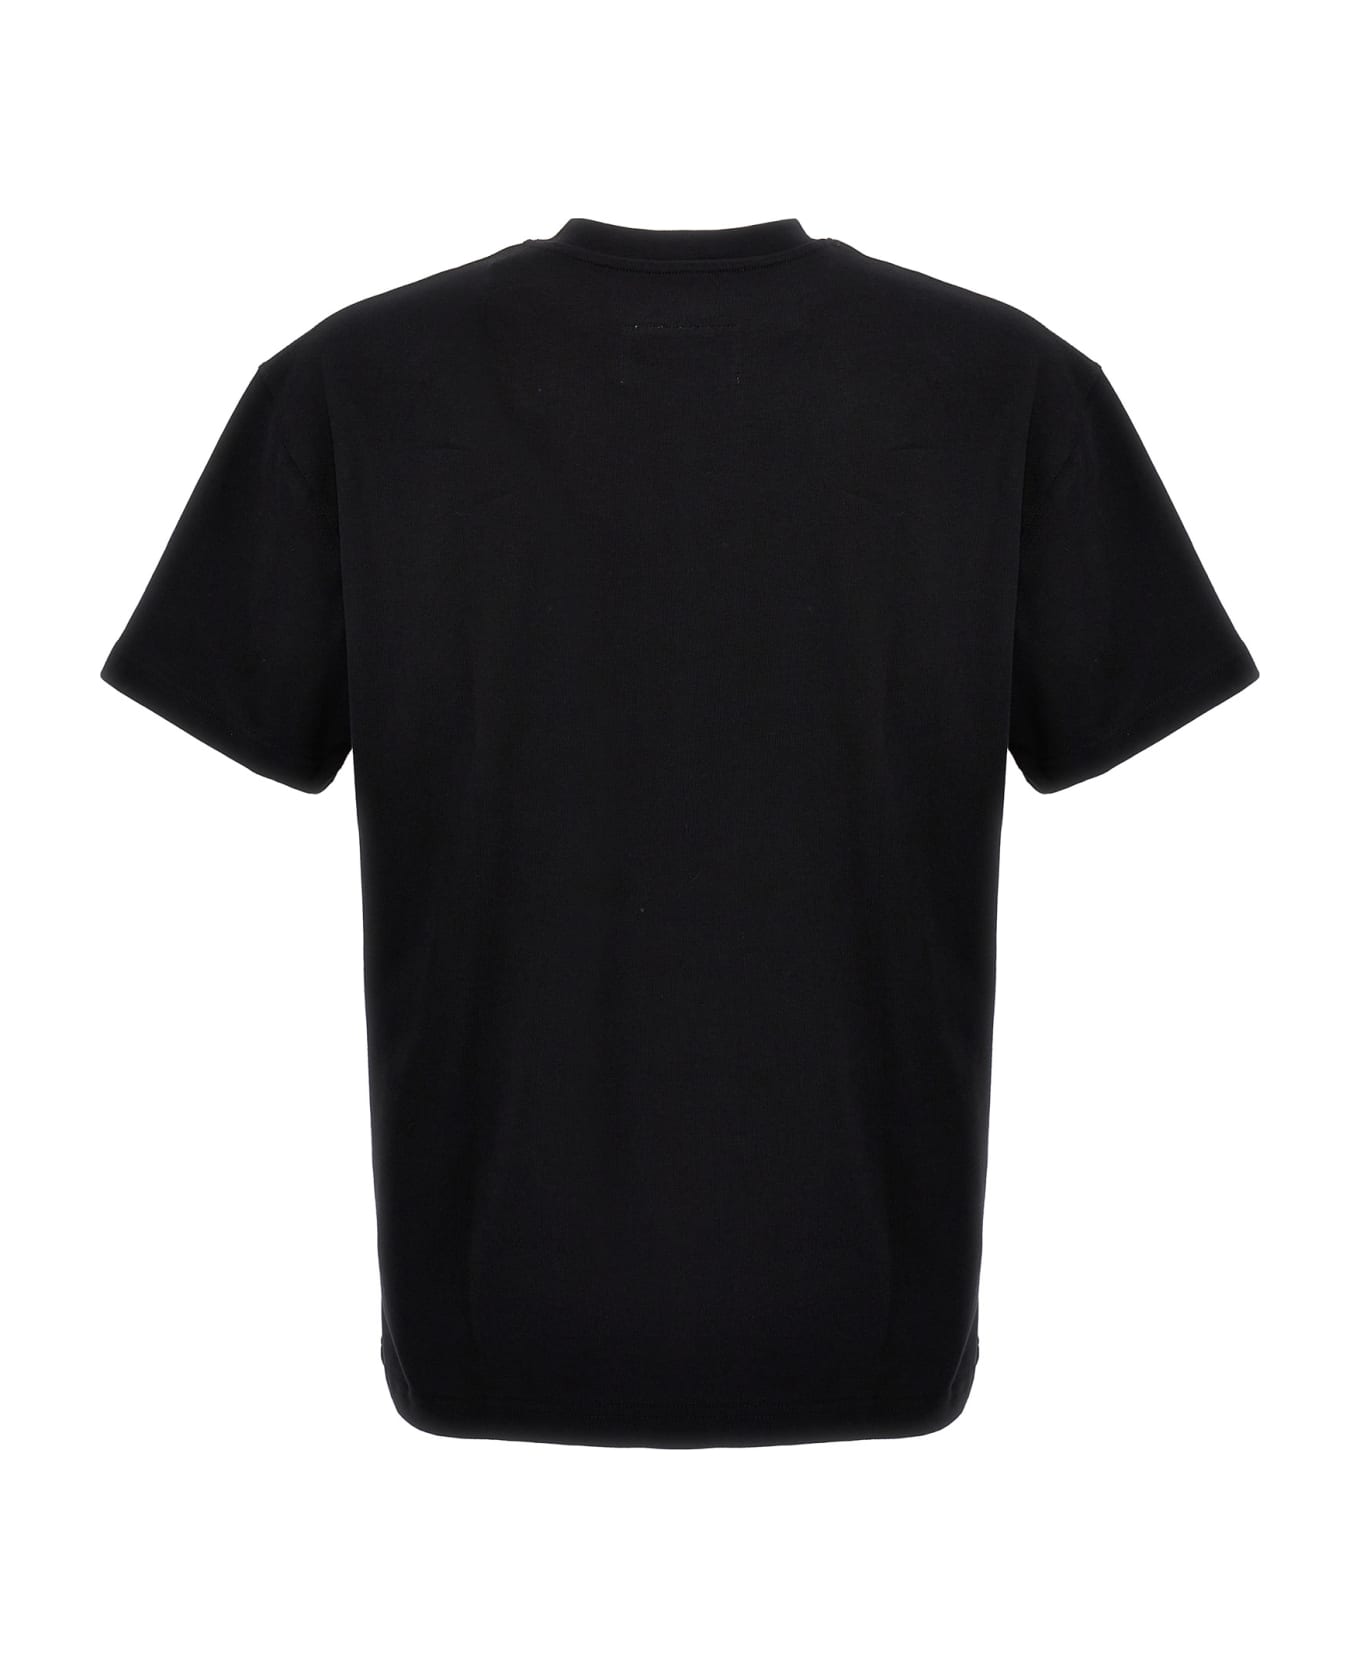 A-COLD-WALL 'essential Small Logo' T-shirt T-Shirt - BLACK